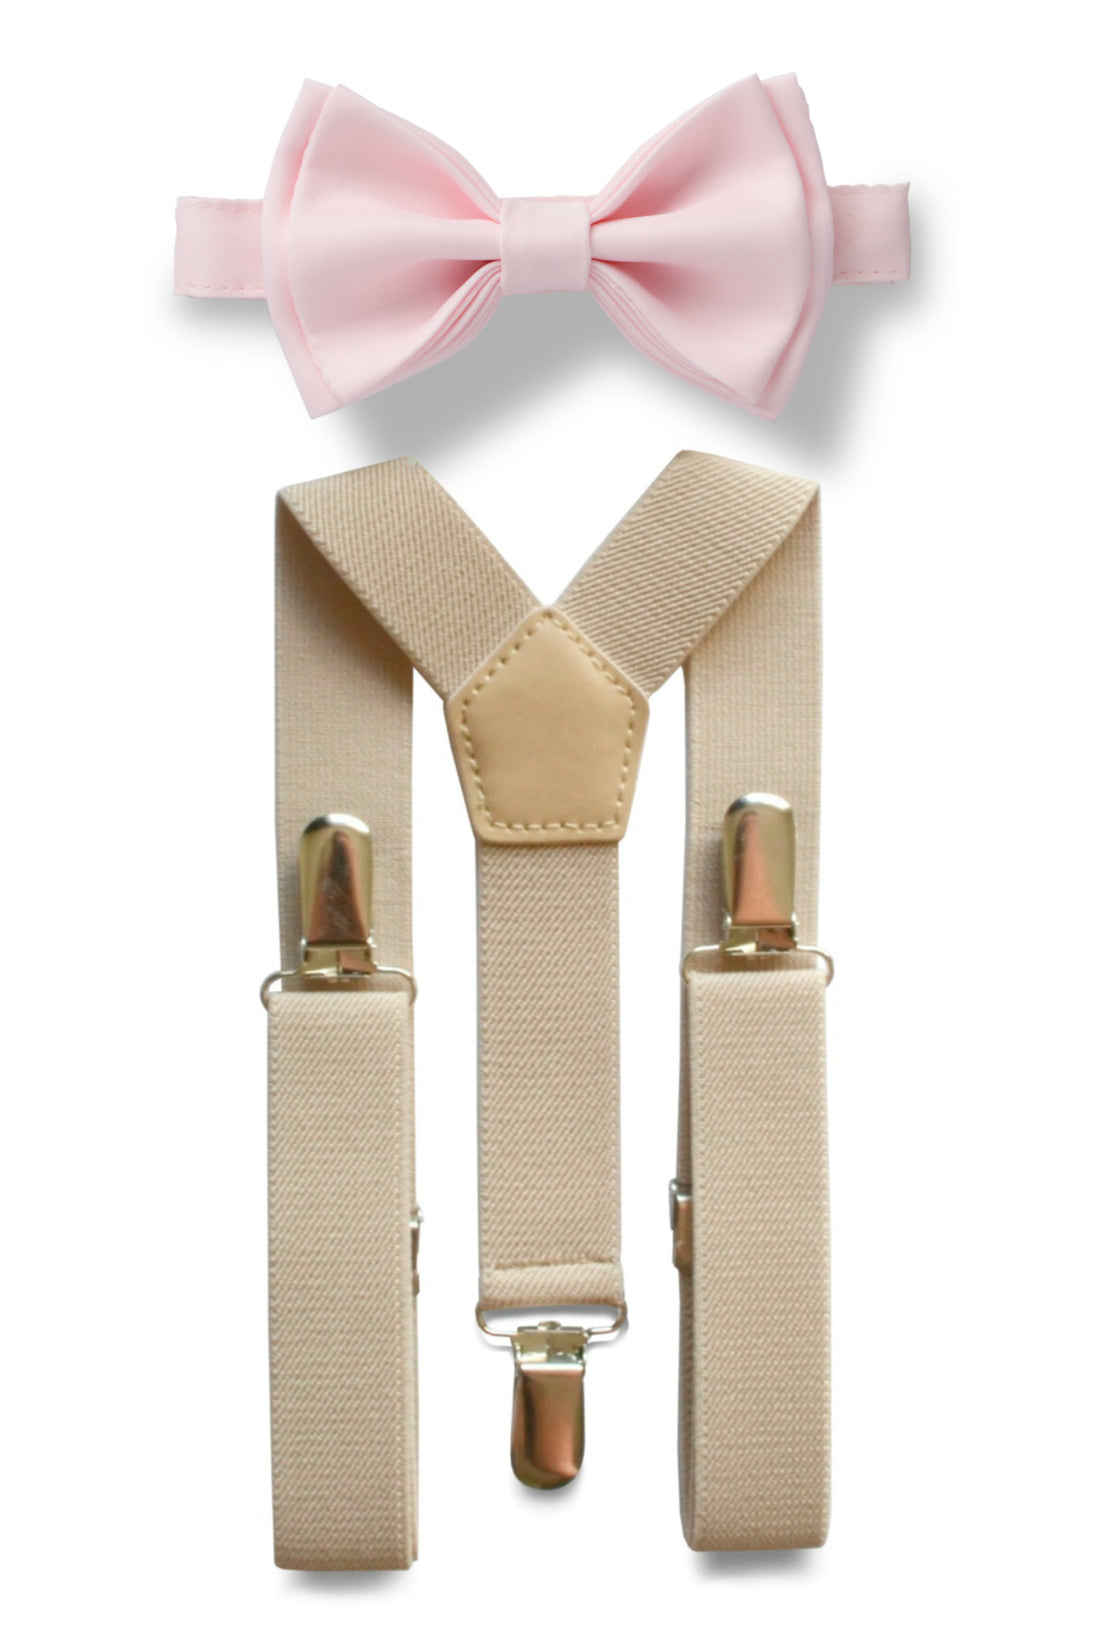 Beige Suspenders & Blushing Pink Bow Tie